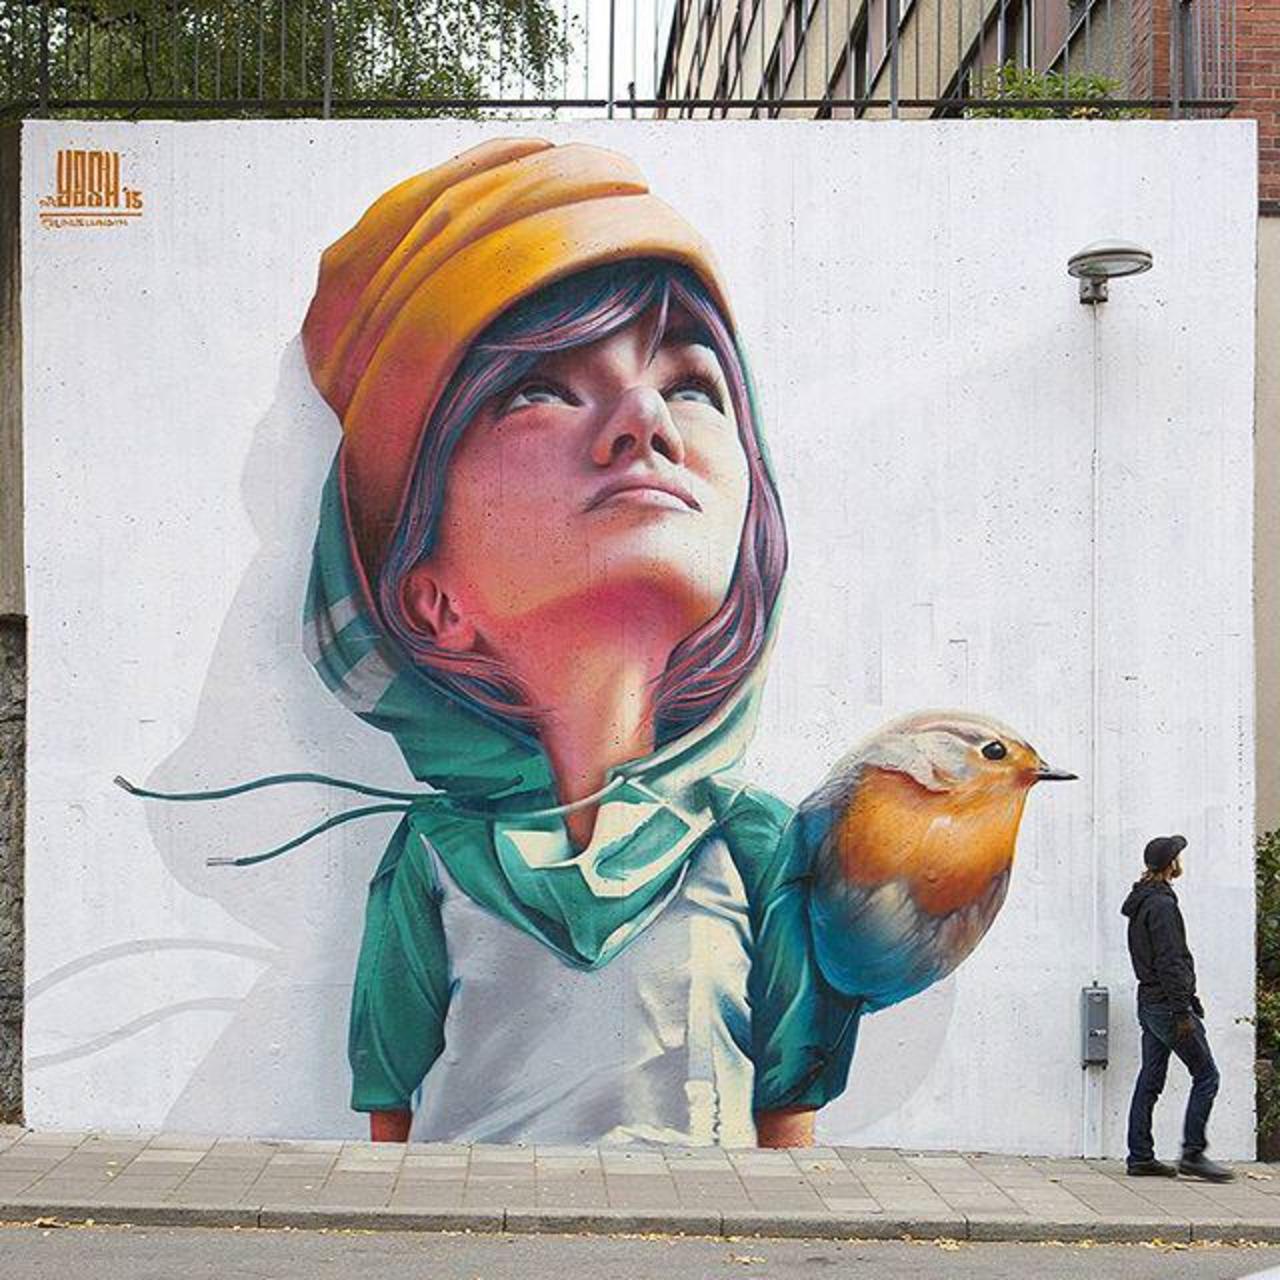 RT @BigArtBoost: RT @cakozlem76: Yash #streetart #urbanart #graffiti #BigArtBoost #Art http://t.co/rGtx0qNwXQ